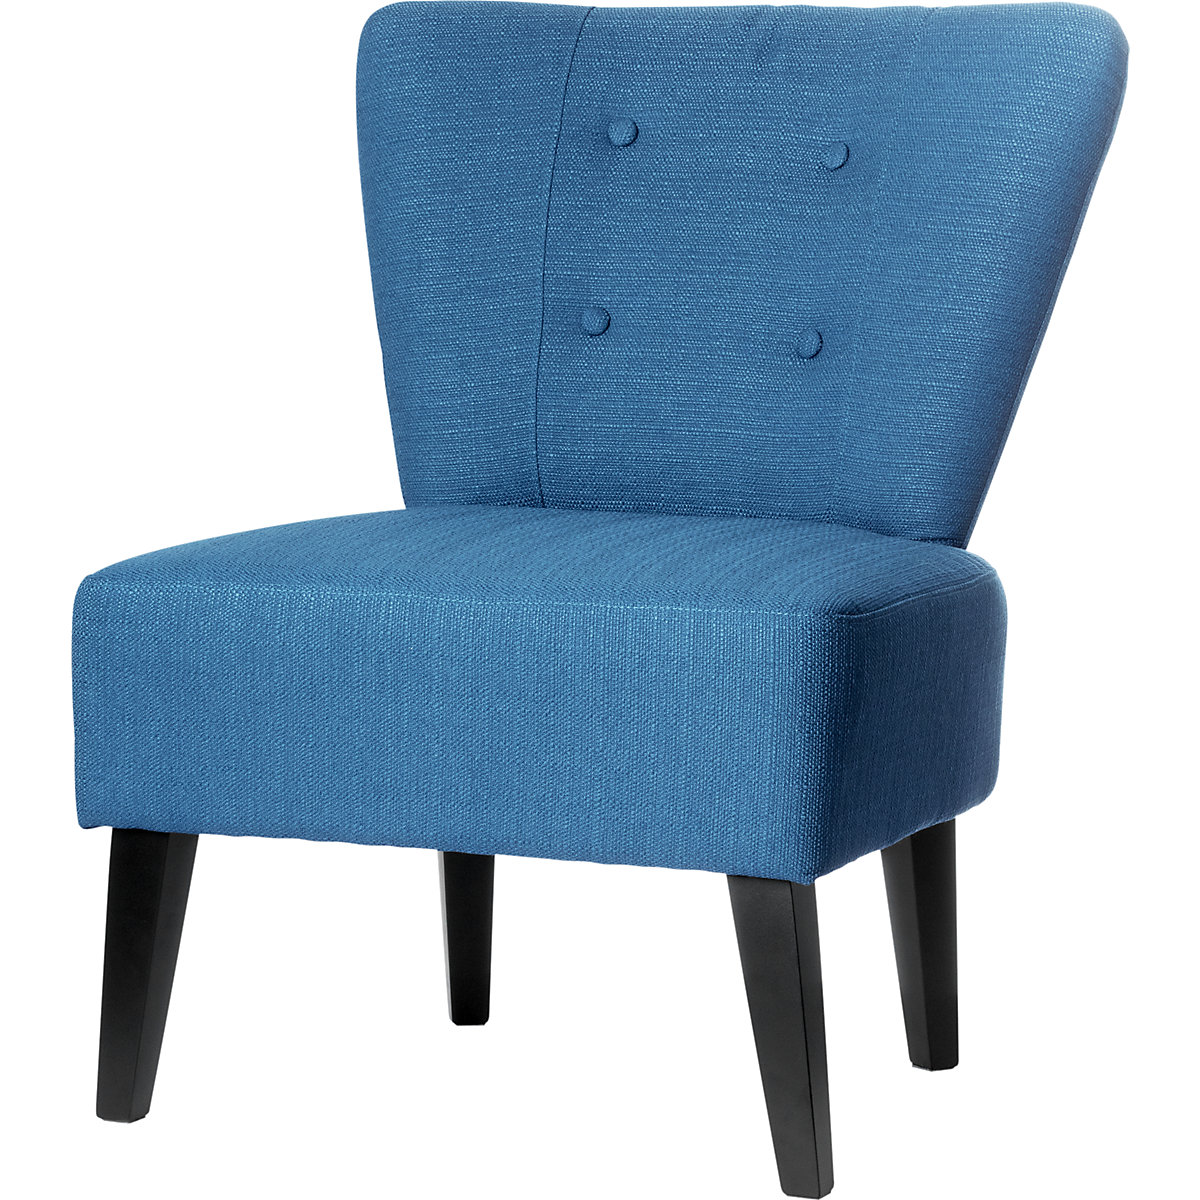 BRIGHTON fotel, tömörfa lábak, kék